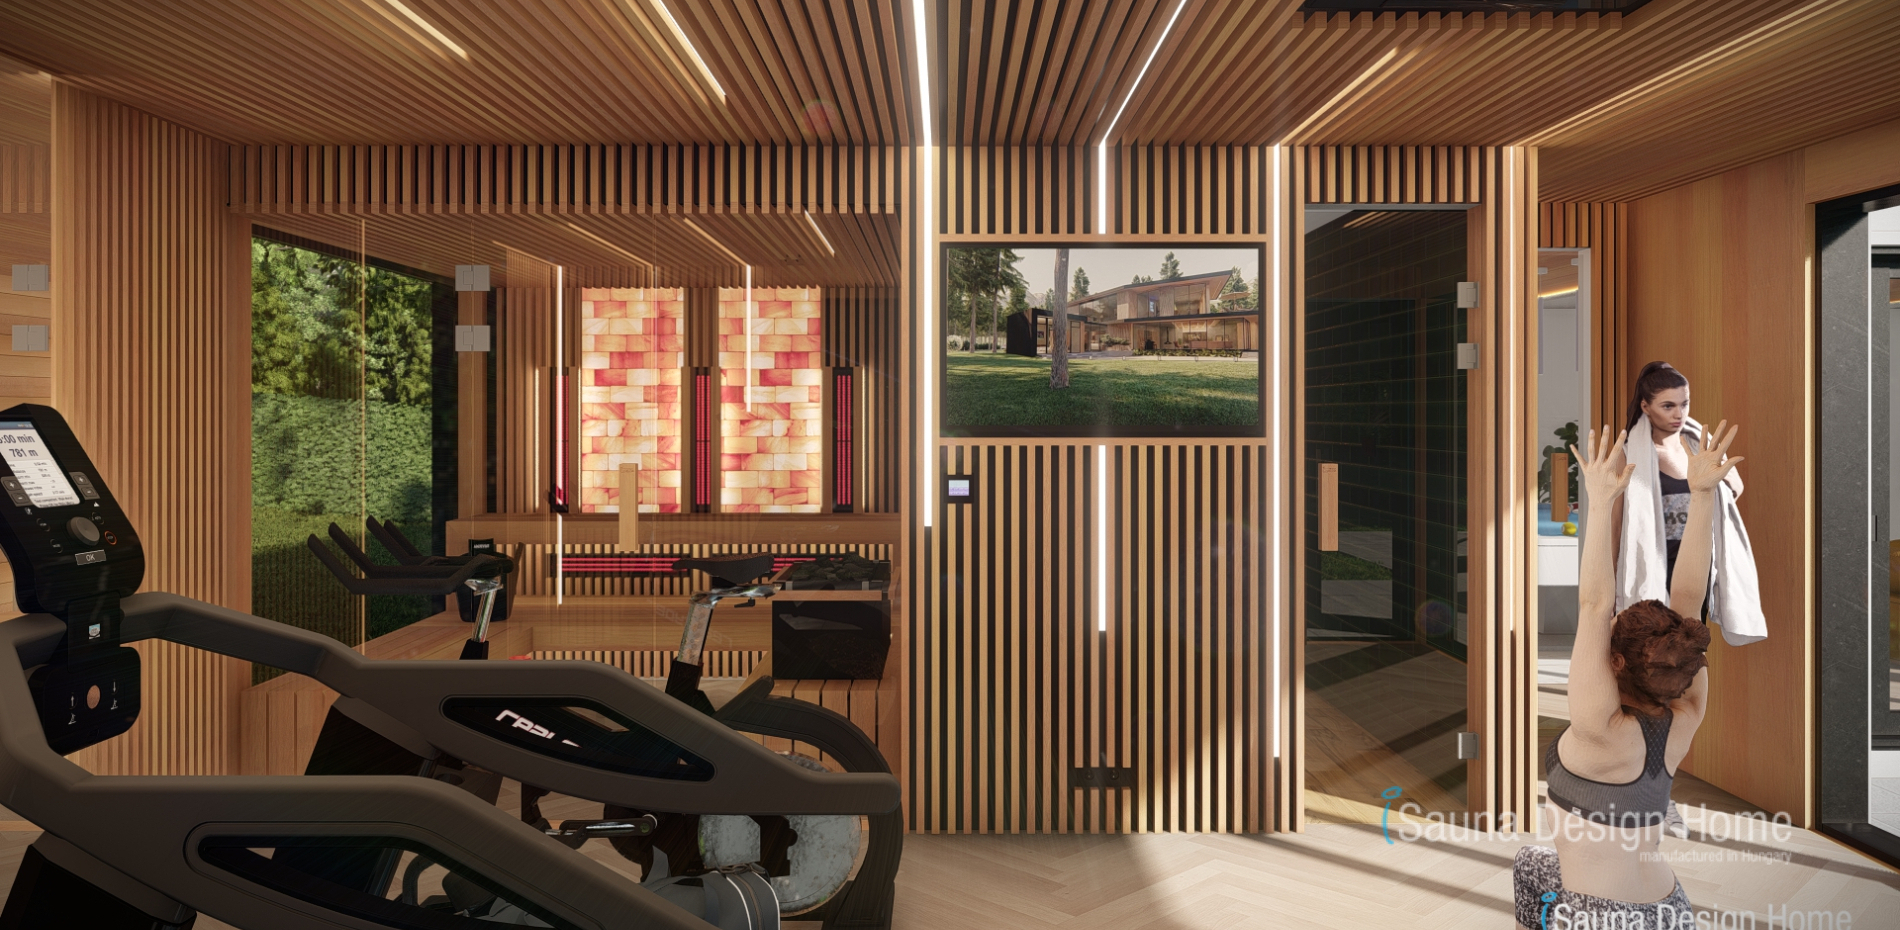 Design and manufacture of sauna wellness